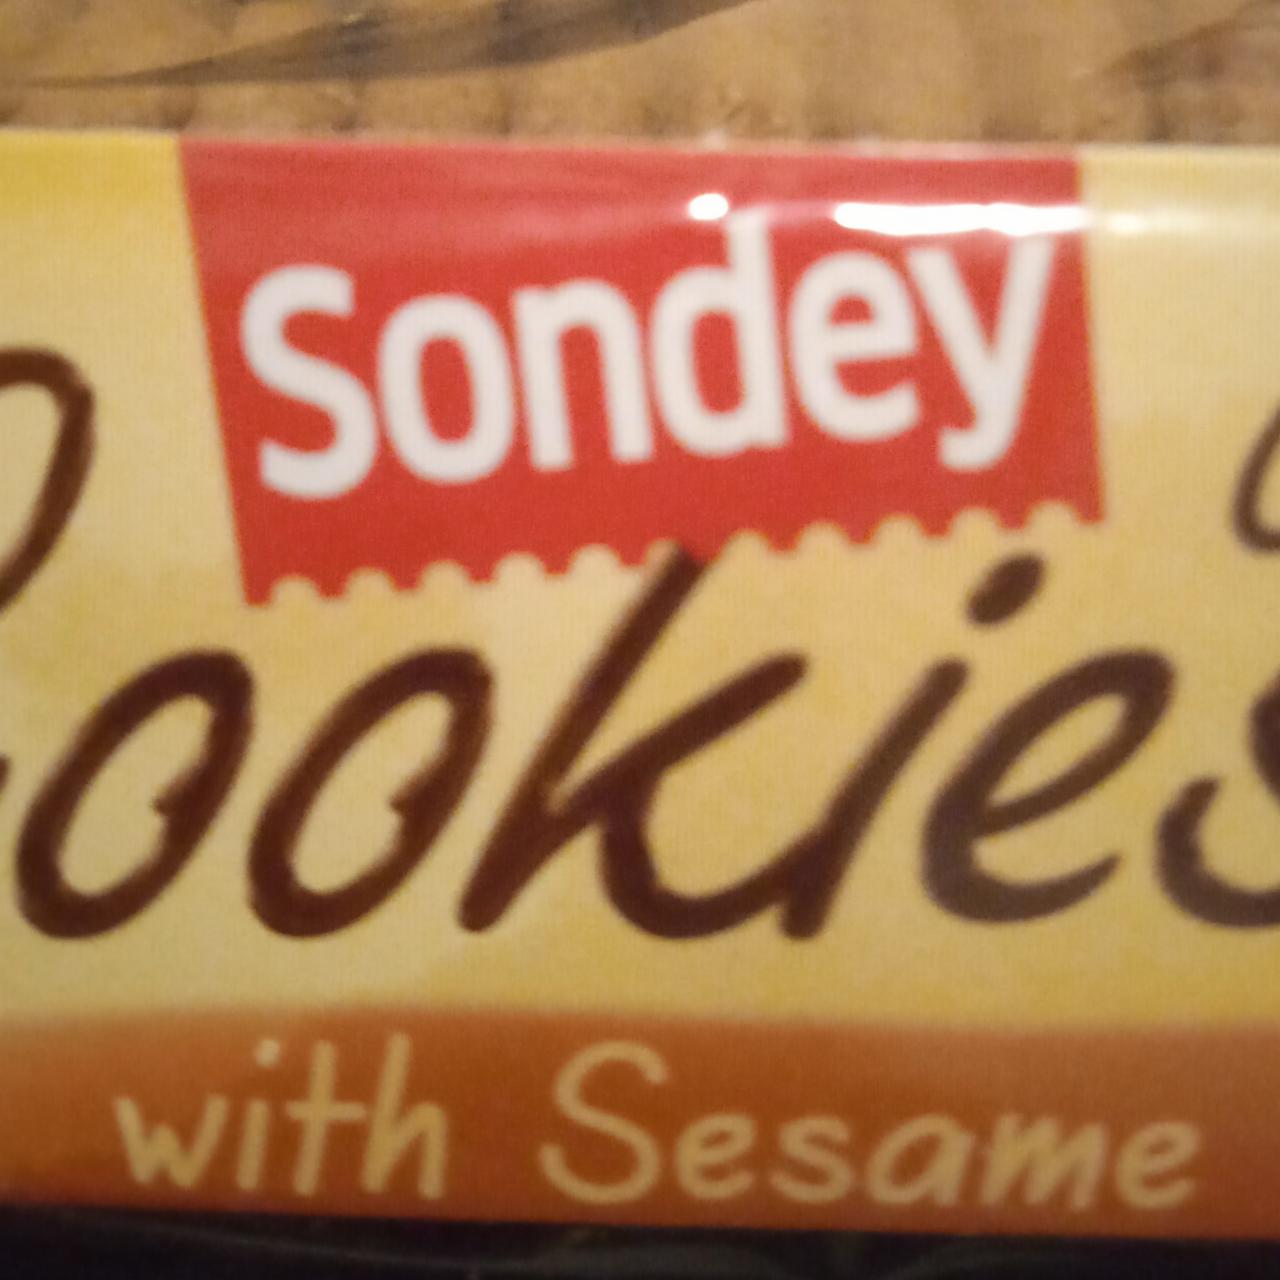 Fotografie - Cookies with sesame Sondey